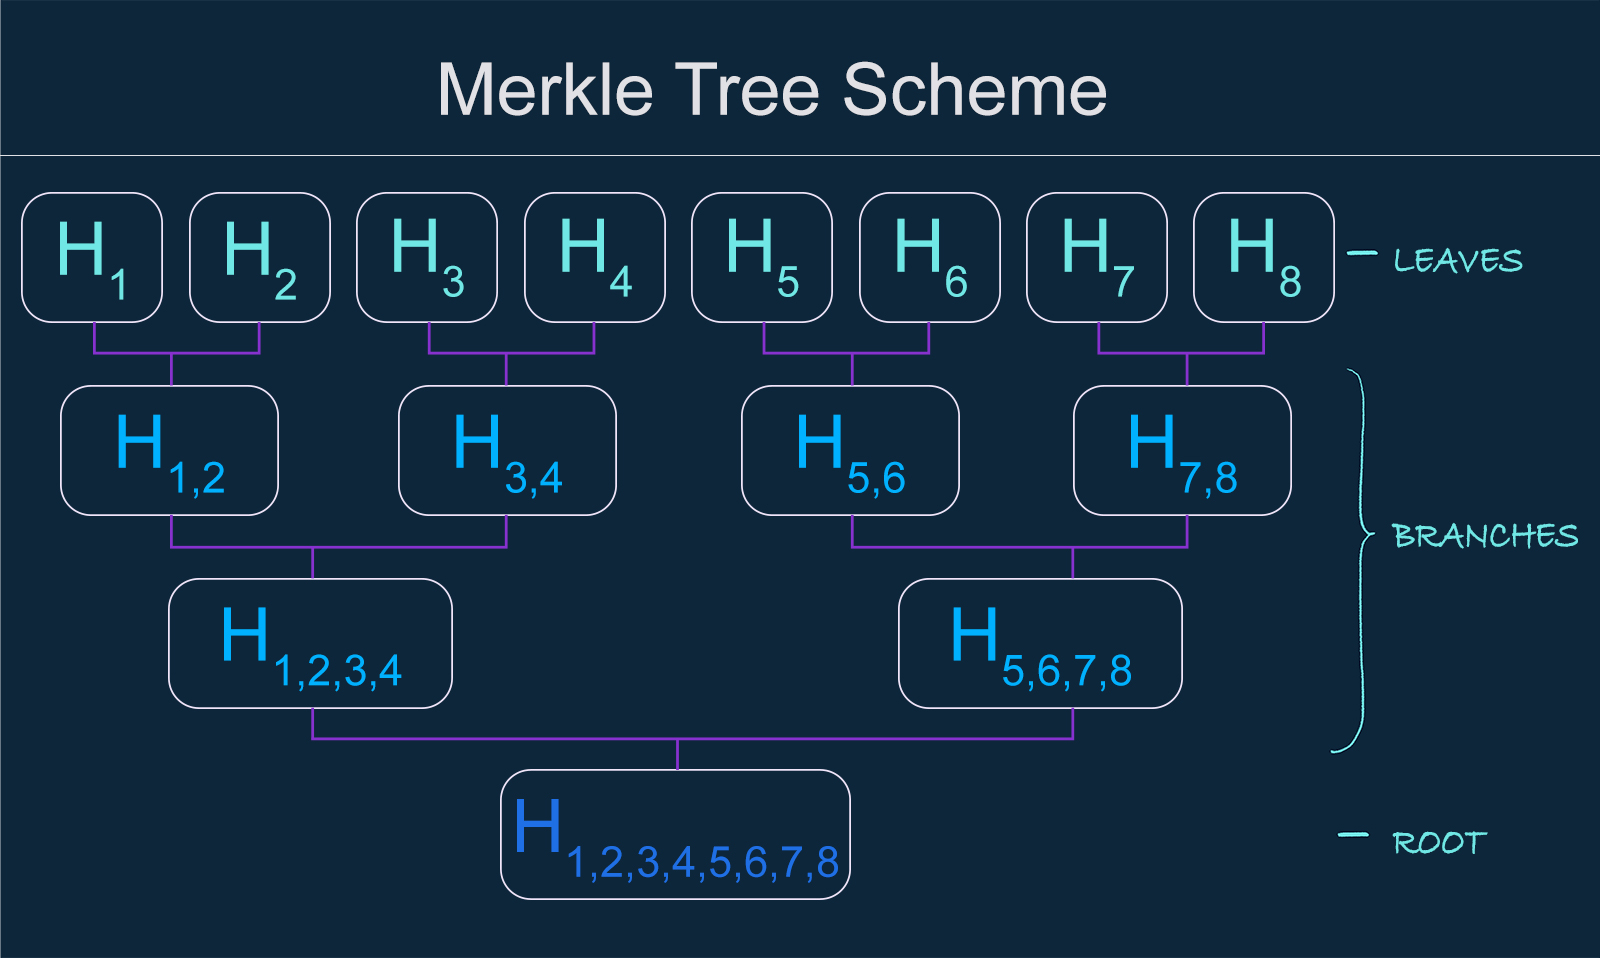 ../../_images/merkle_tree_scheme.jpg